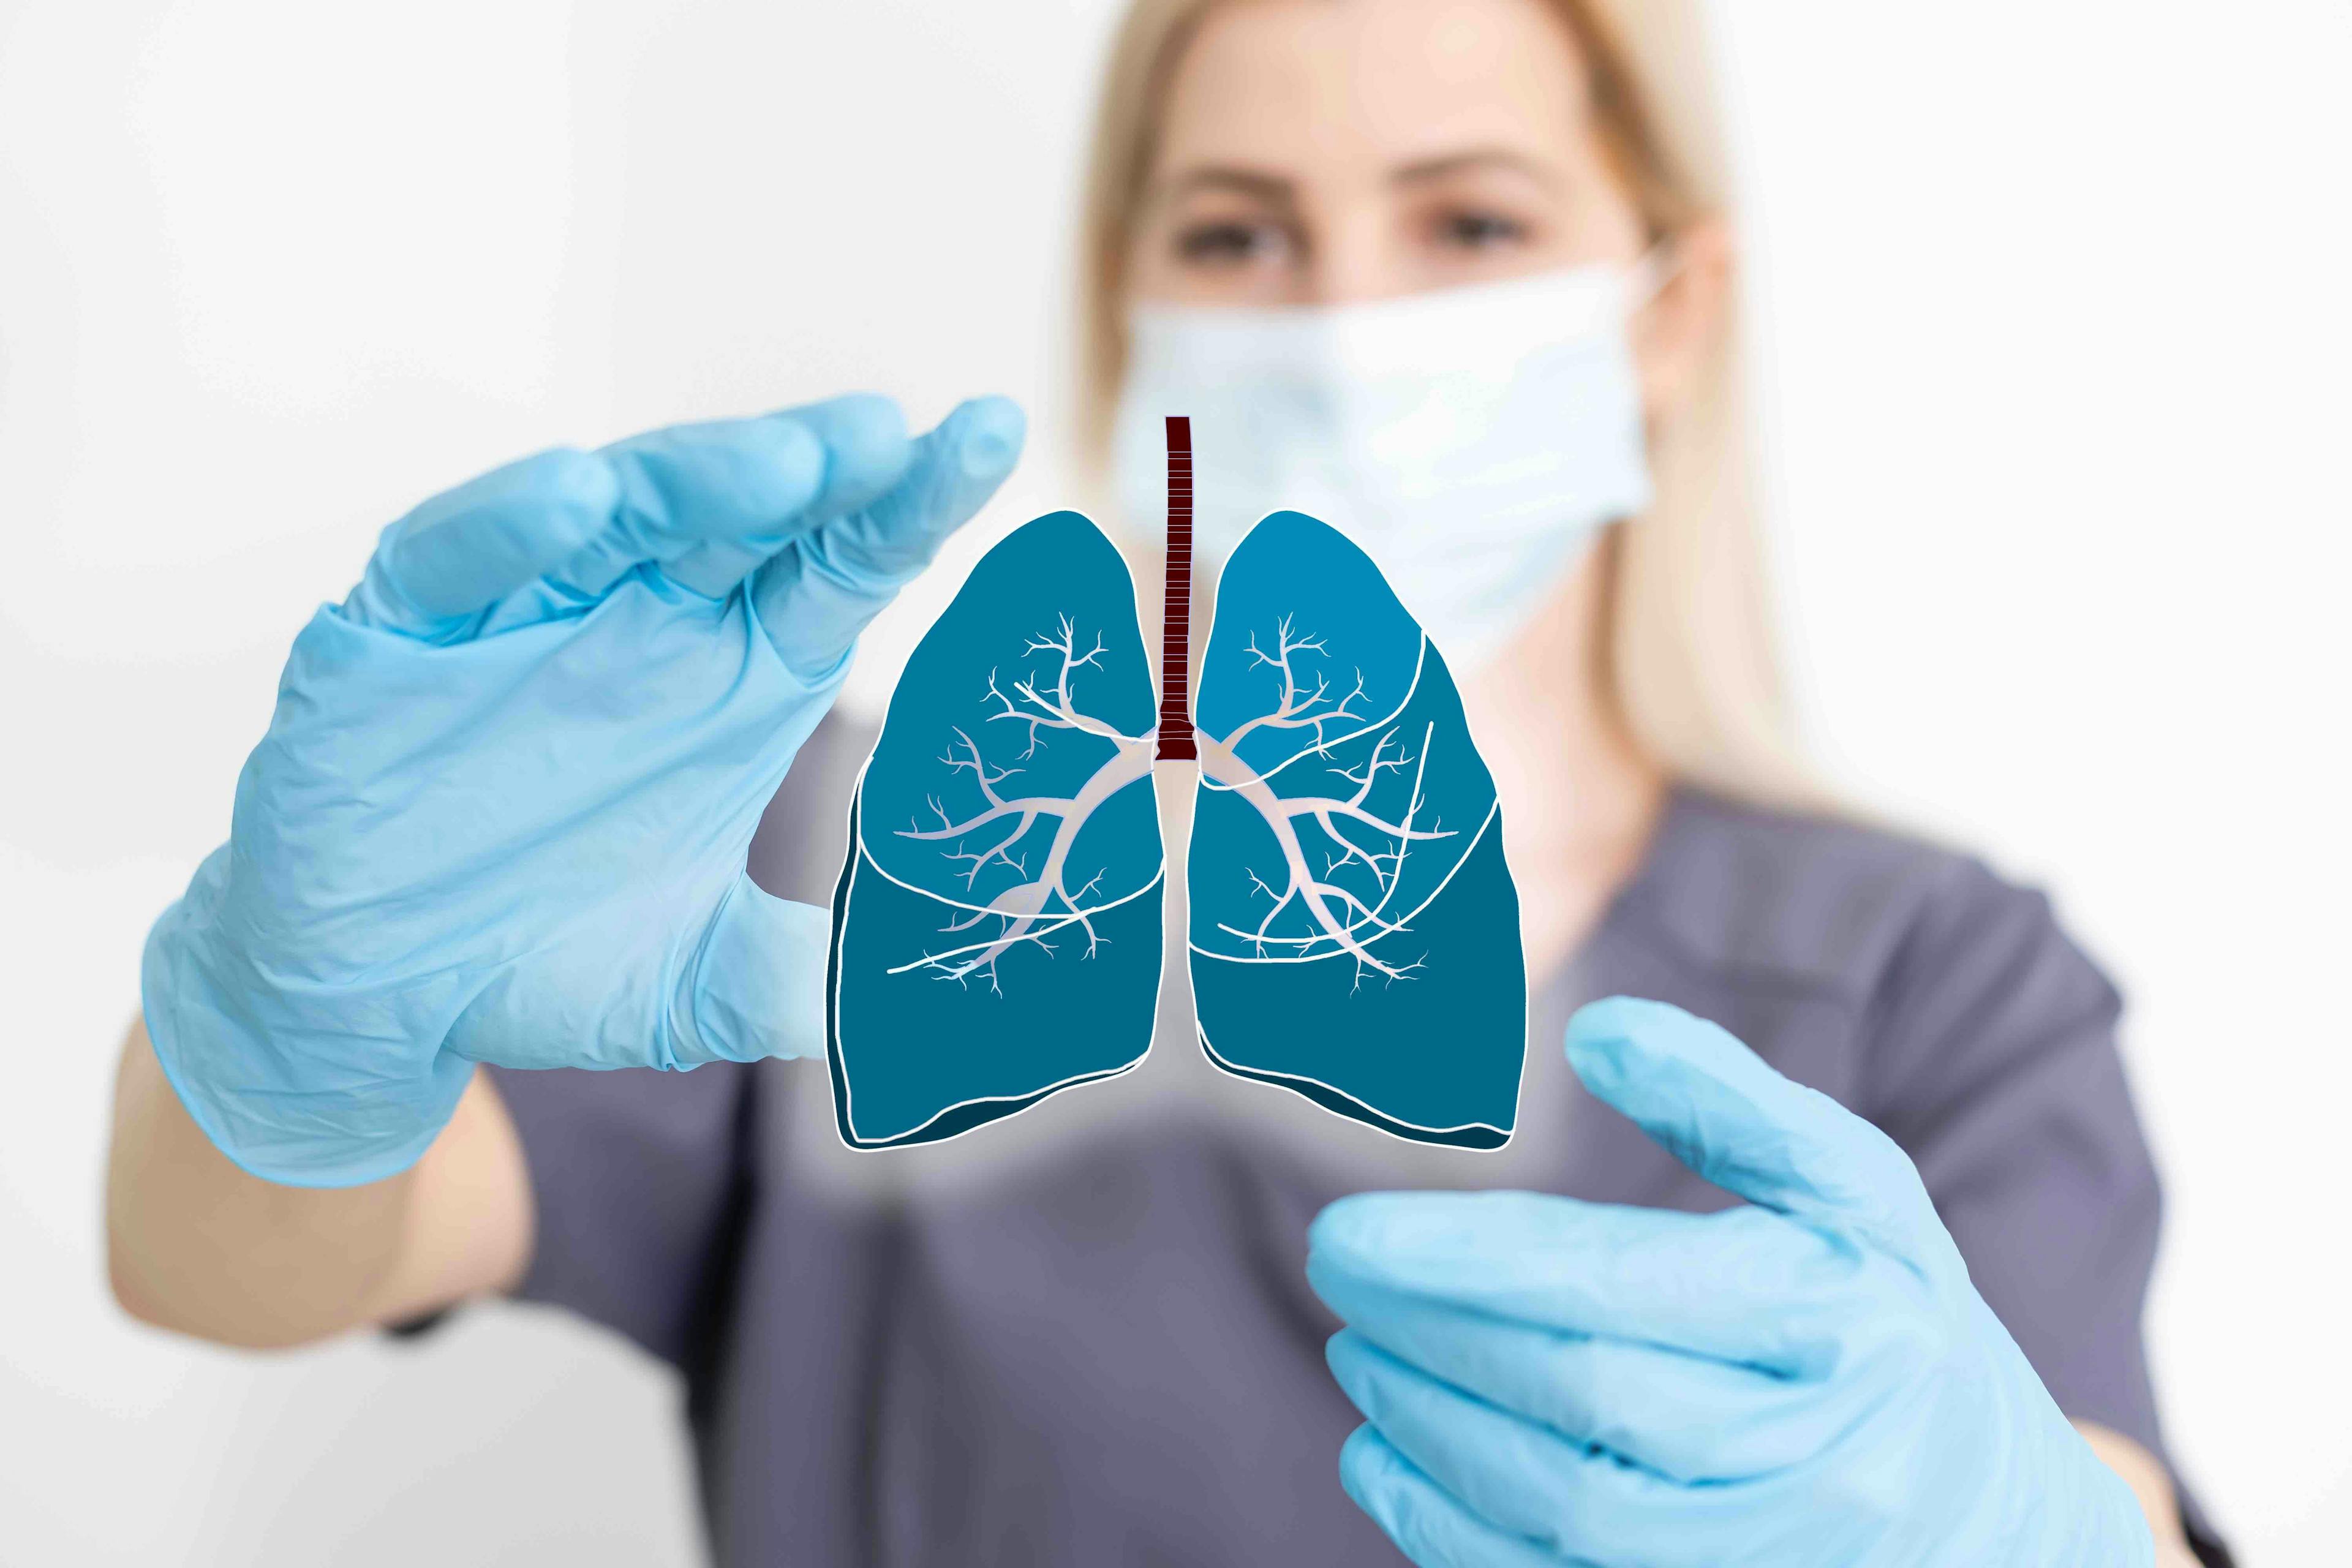 Lungs illustration - Angelov - stock.adobe.com